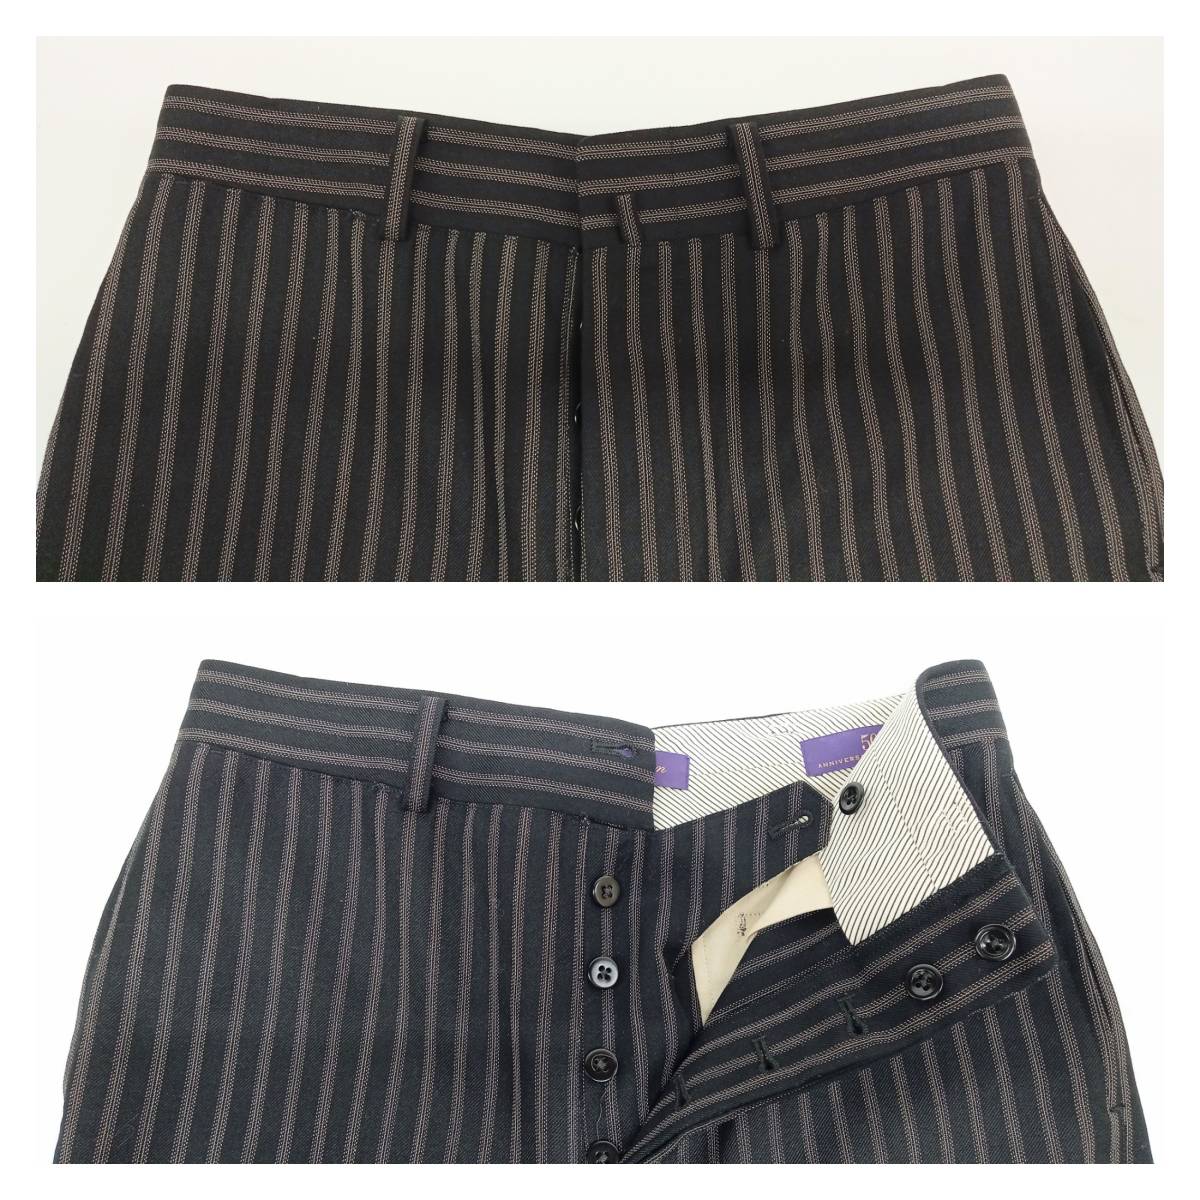 RALPH LAUREN Ralph Lauren purple lable 290730062001 stripe pants slacks 50 anniversary collection M black through year 